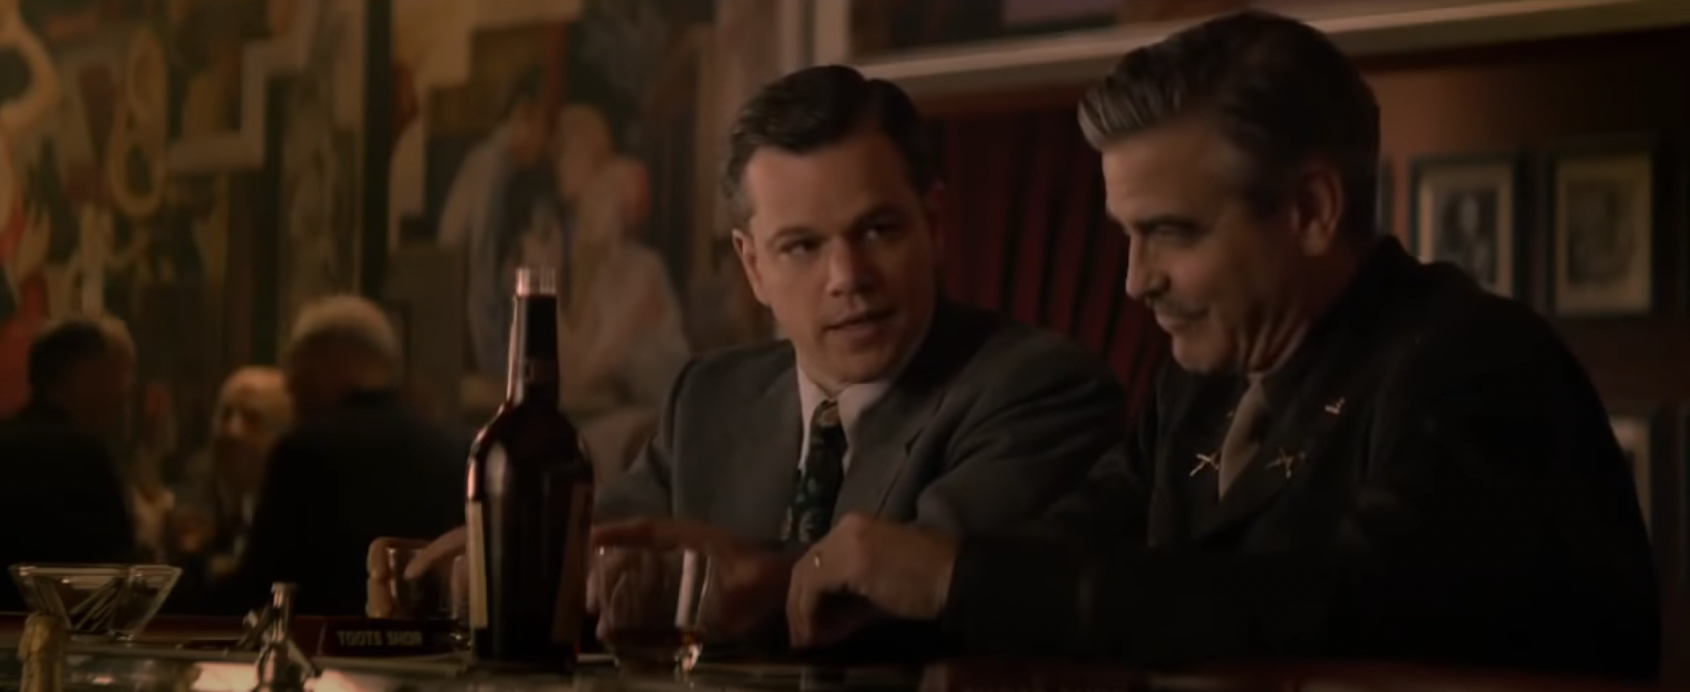 Matt Damon and George Clooney at a bat